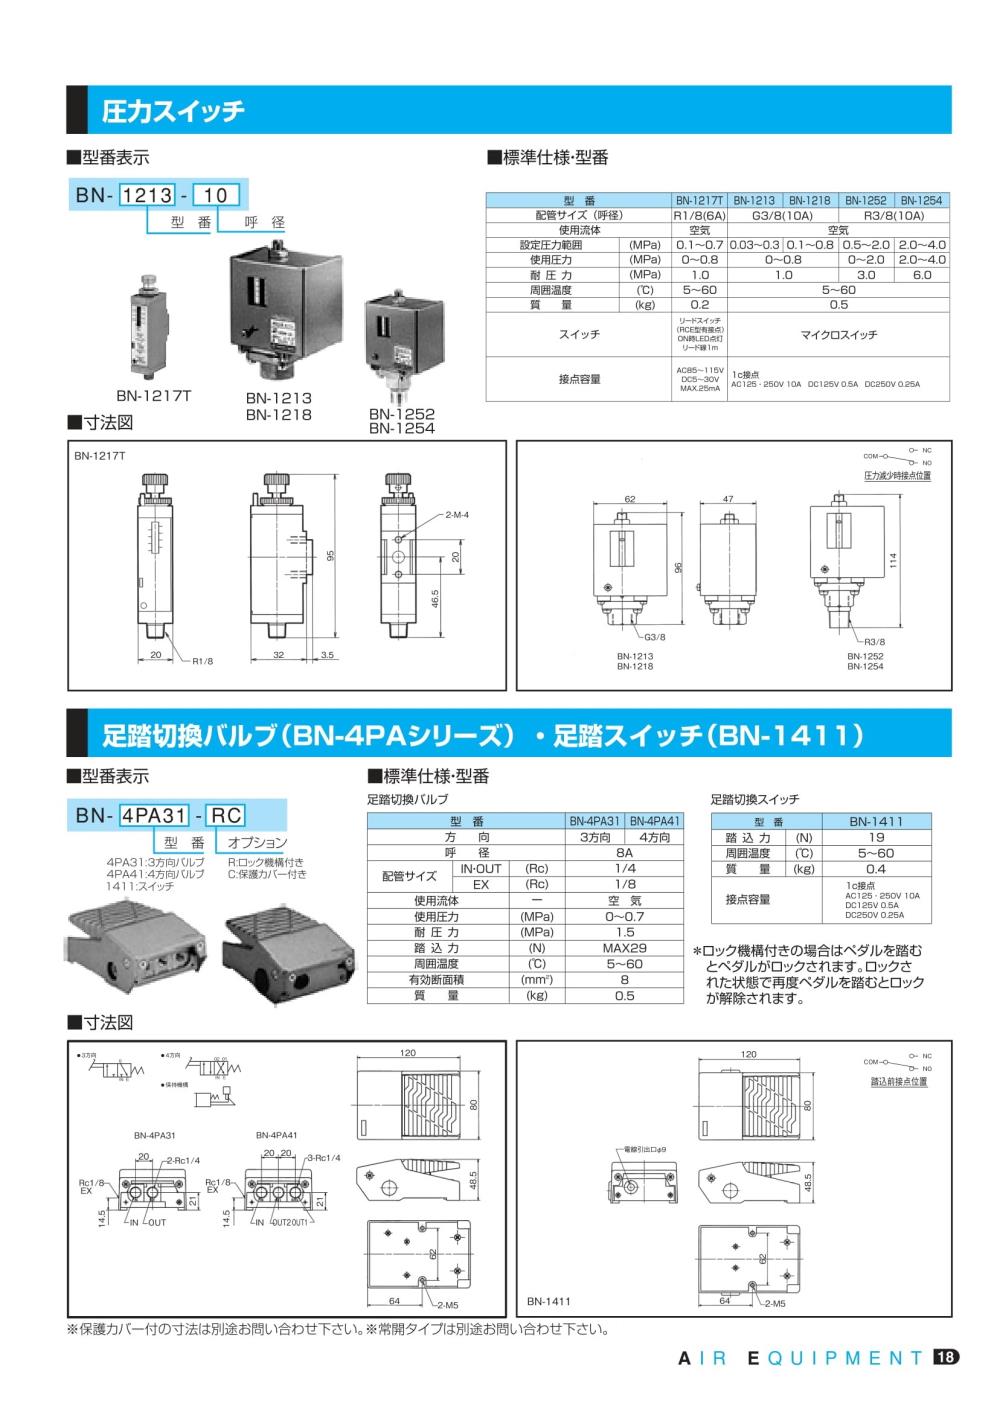 NIHON SEIKI Pressure Switch BN-1254 Series